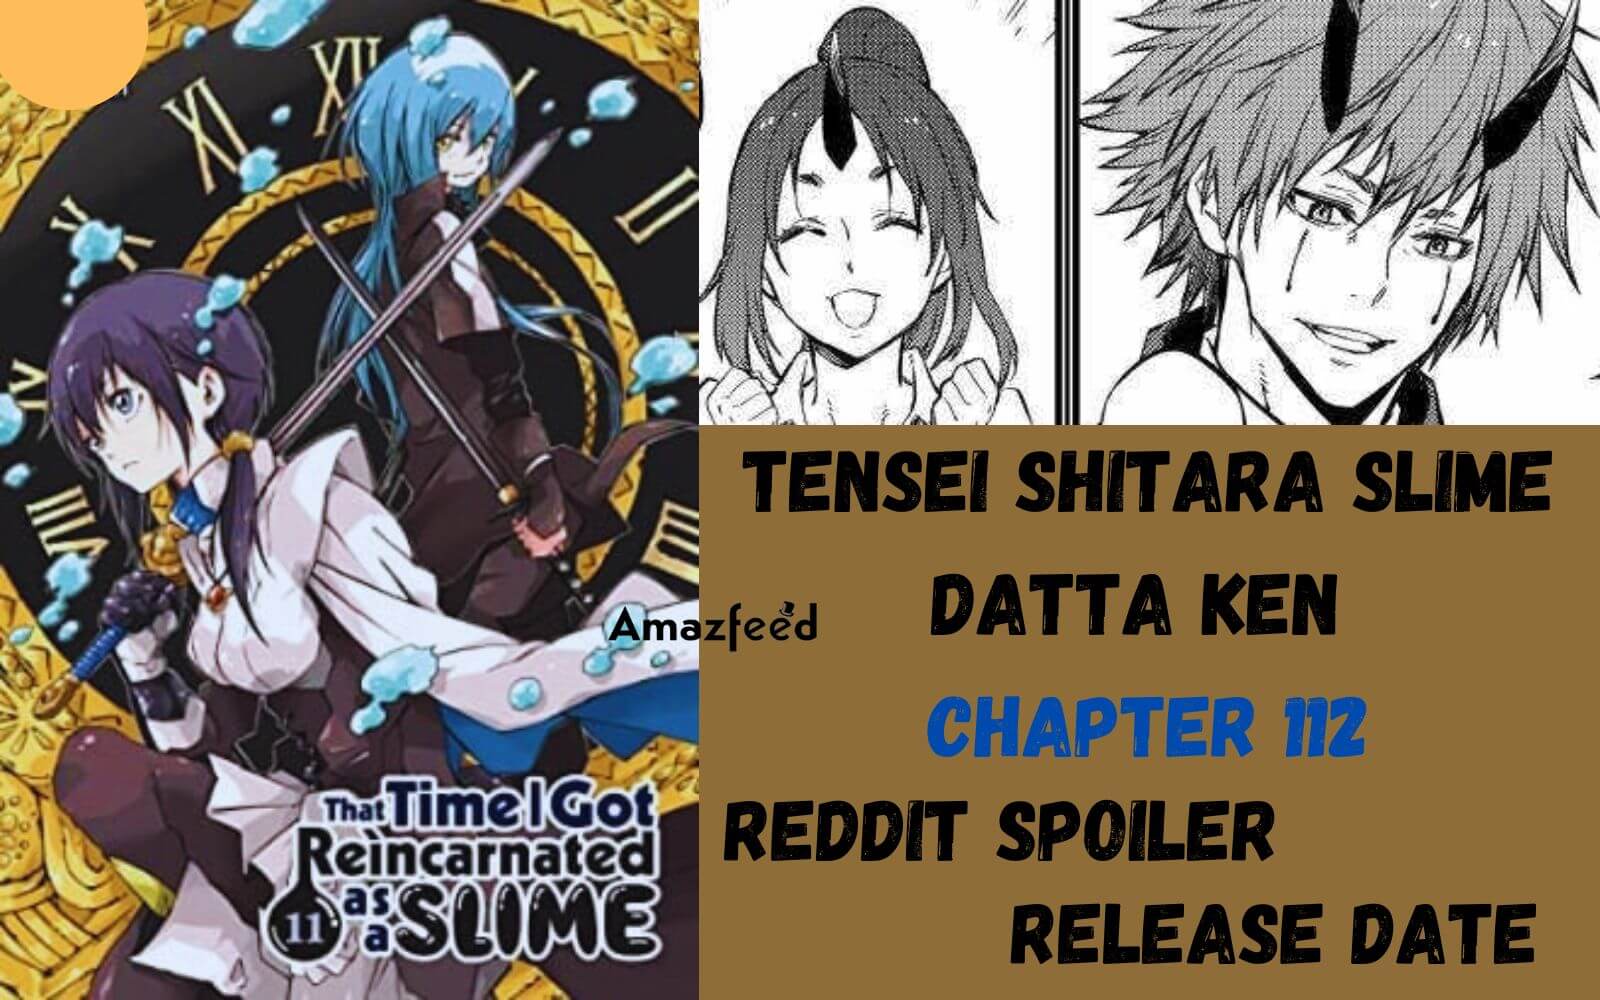 Tensei shitara Slime Datta Ken Chapter 112 Discussion - Forums 